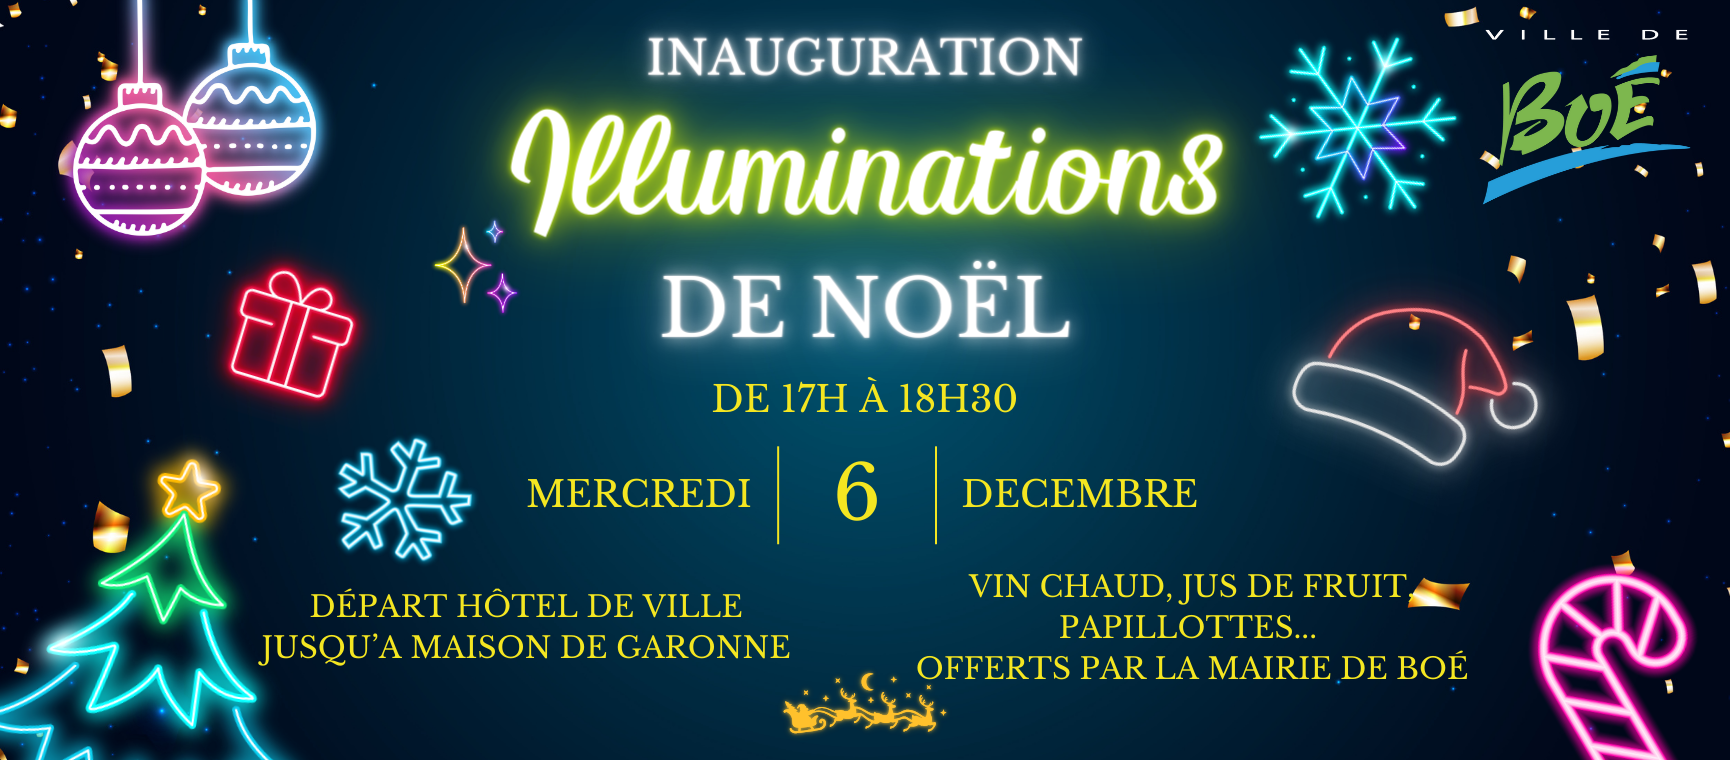 Dernières actualités - Inauguration illuminations de Noël